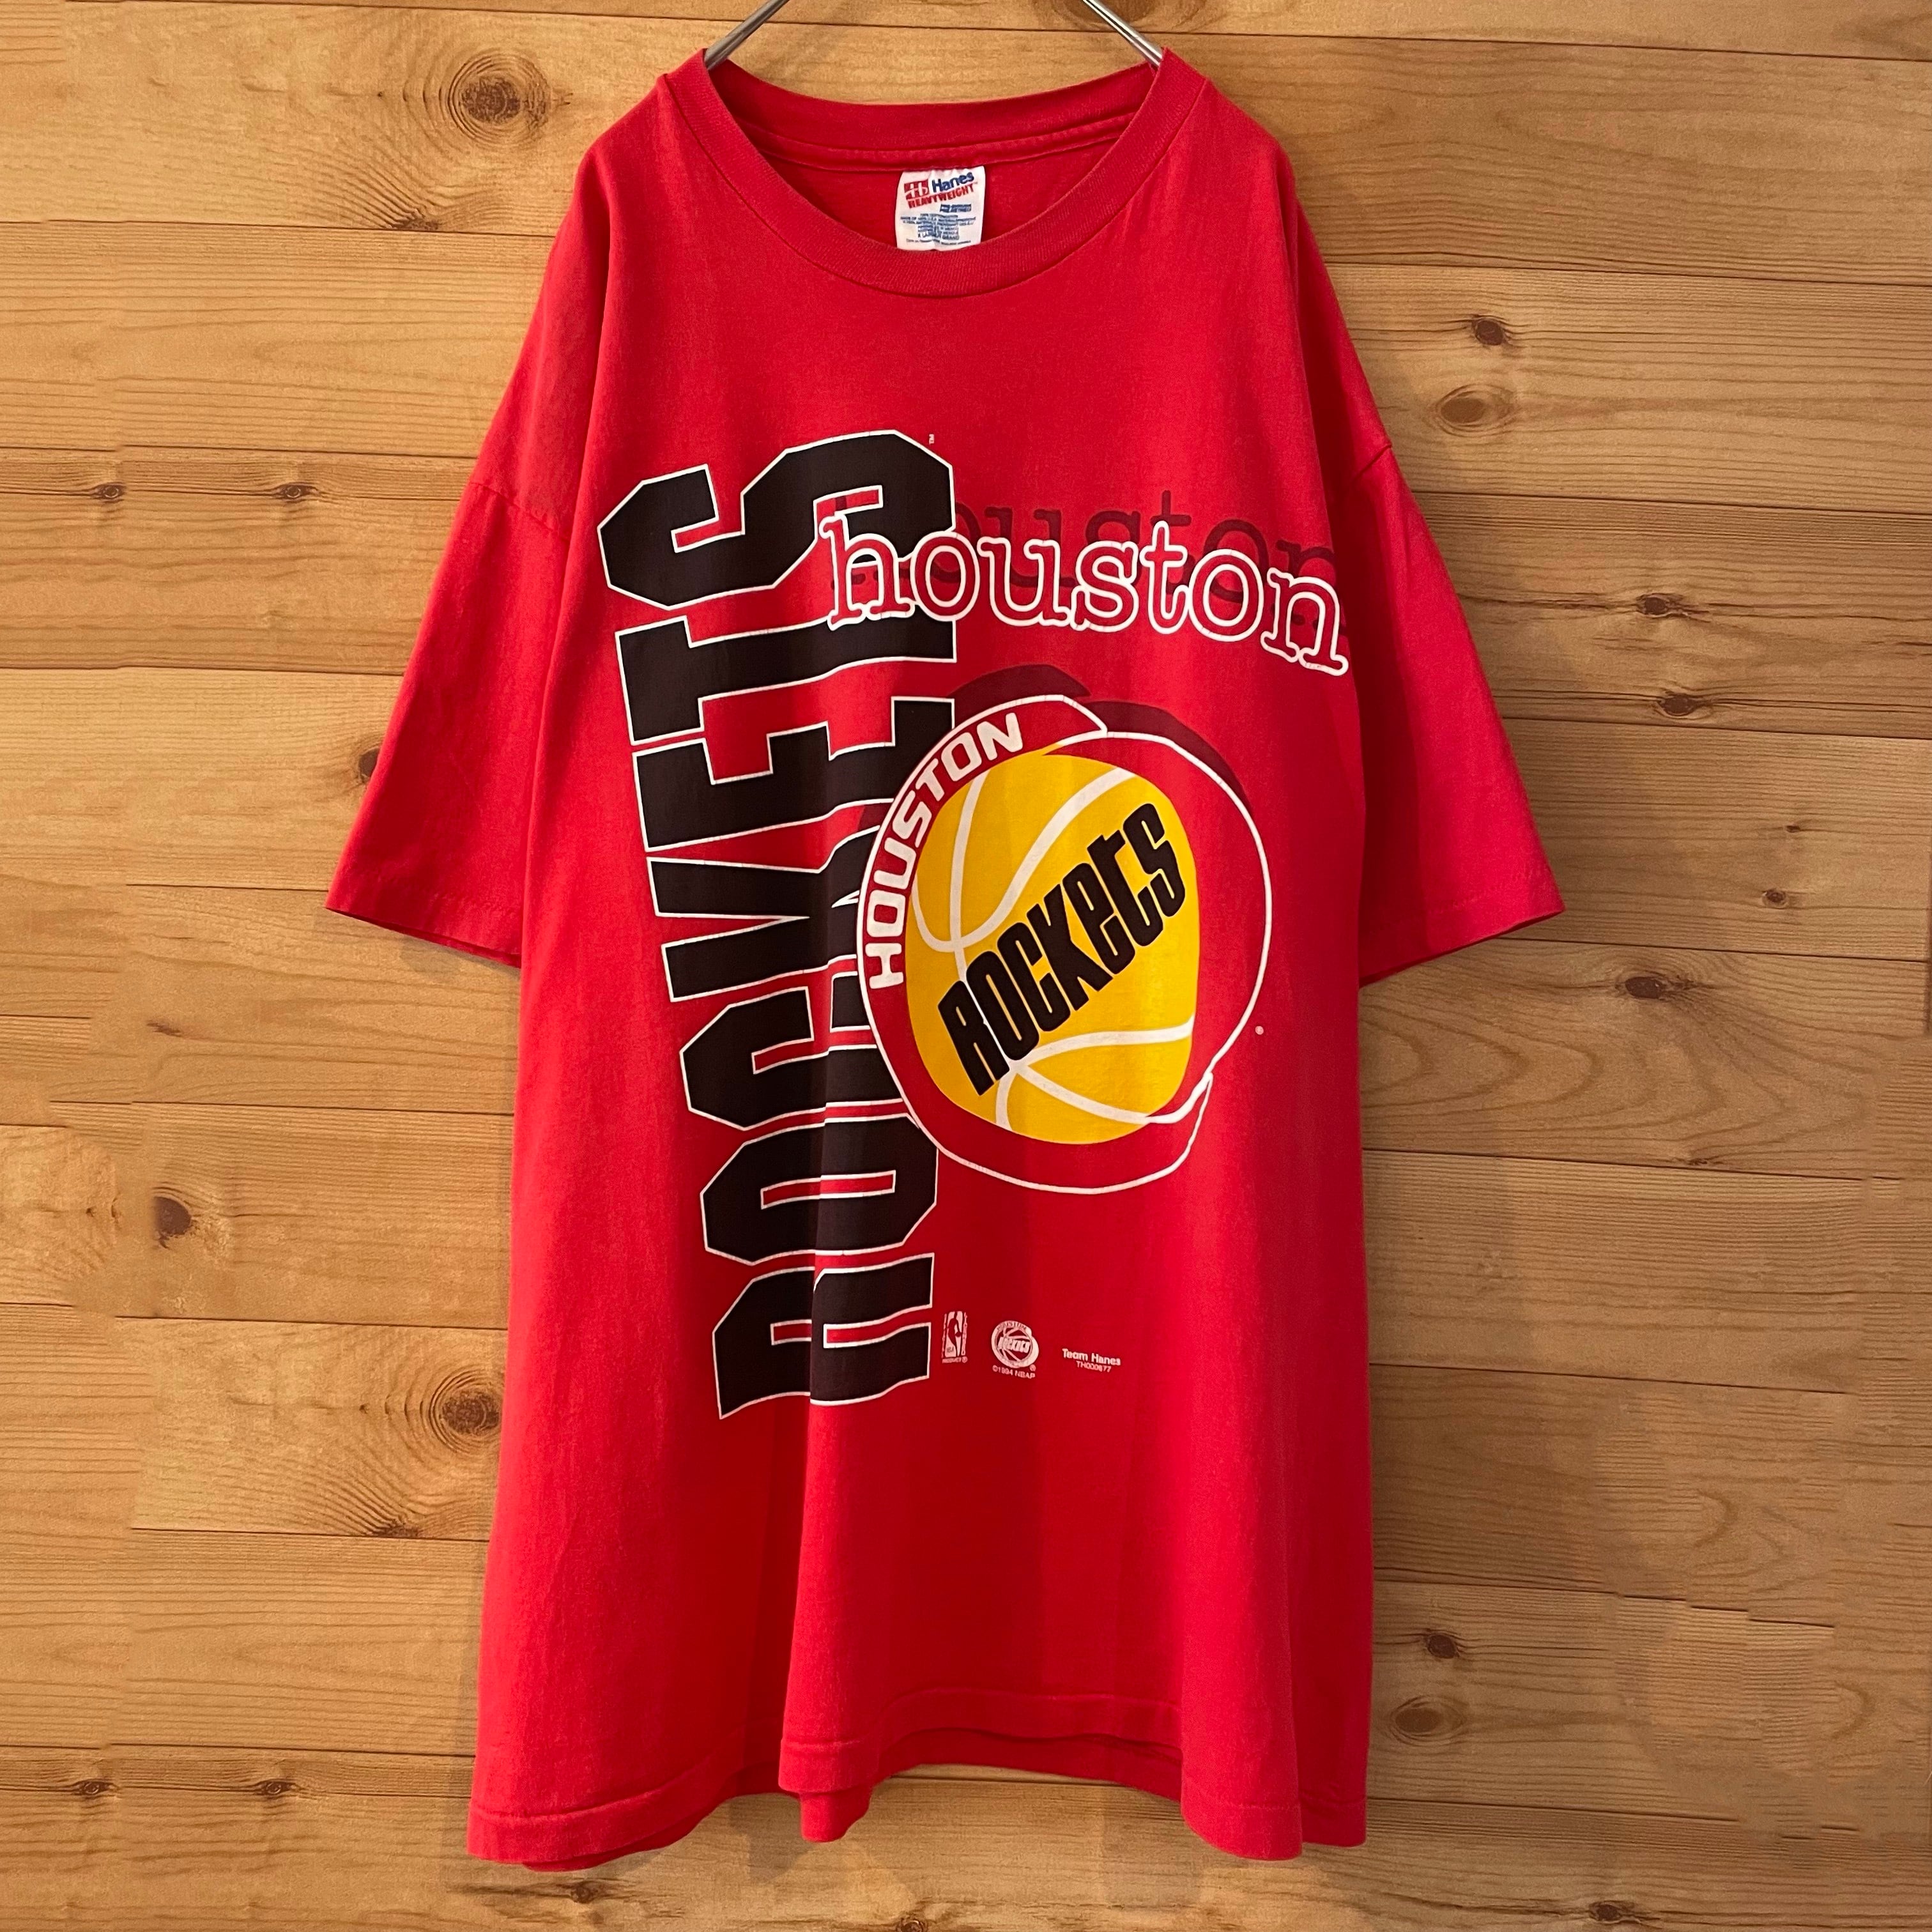 Hanes】USA製 90s NBA HOUSTON ROCKETS オフィシャル Tシャツ